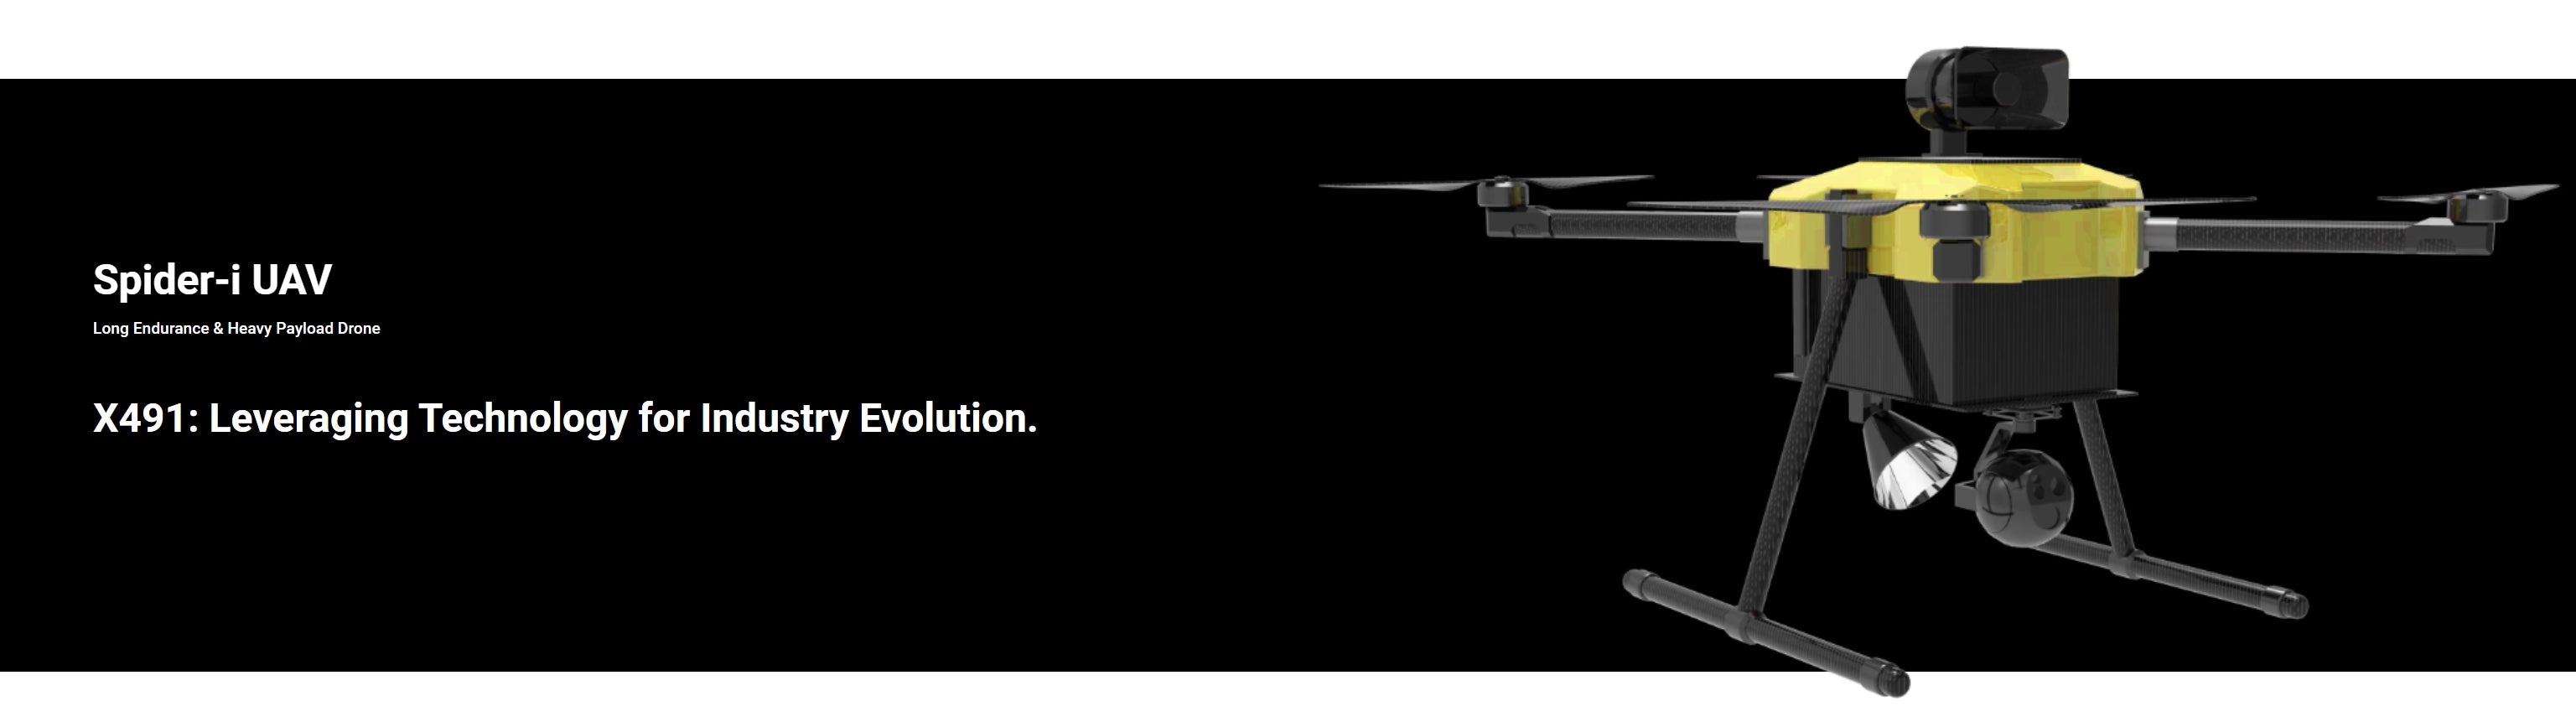 X491 Ultra Long Endurance Drone, Spider-i UAV Long Endurance & Heavy Payload Drone X49